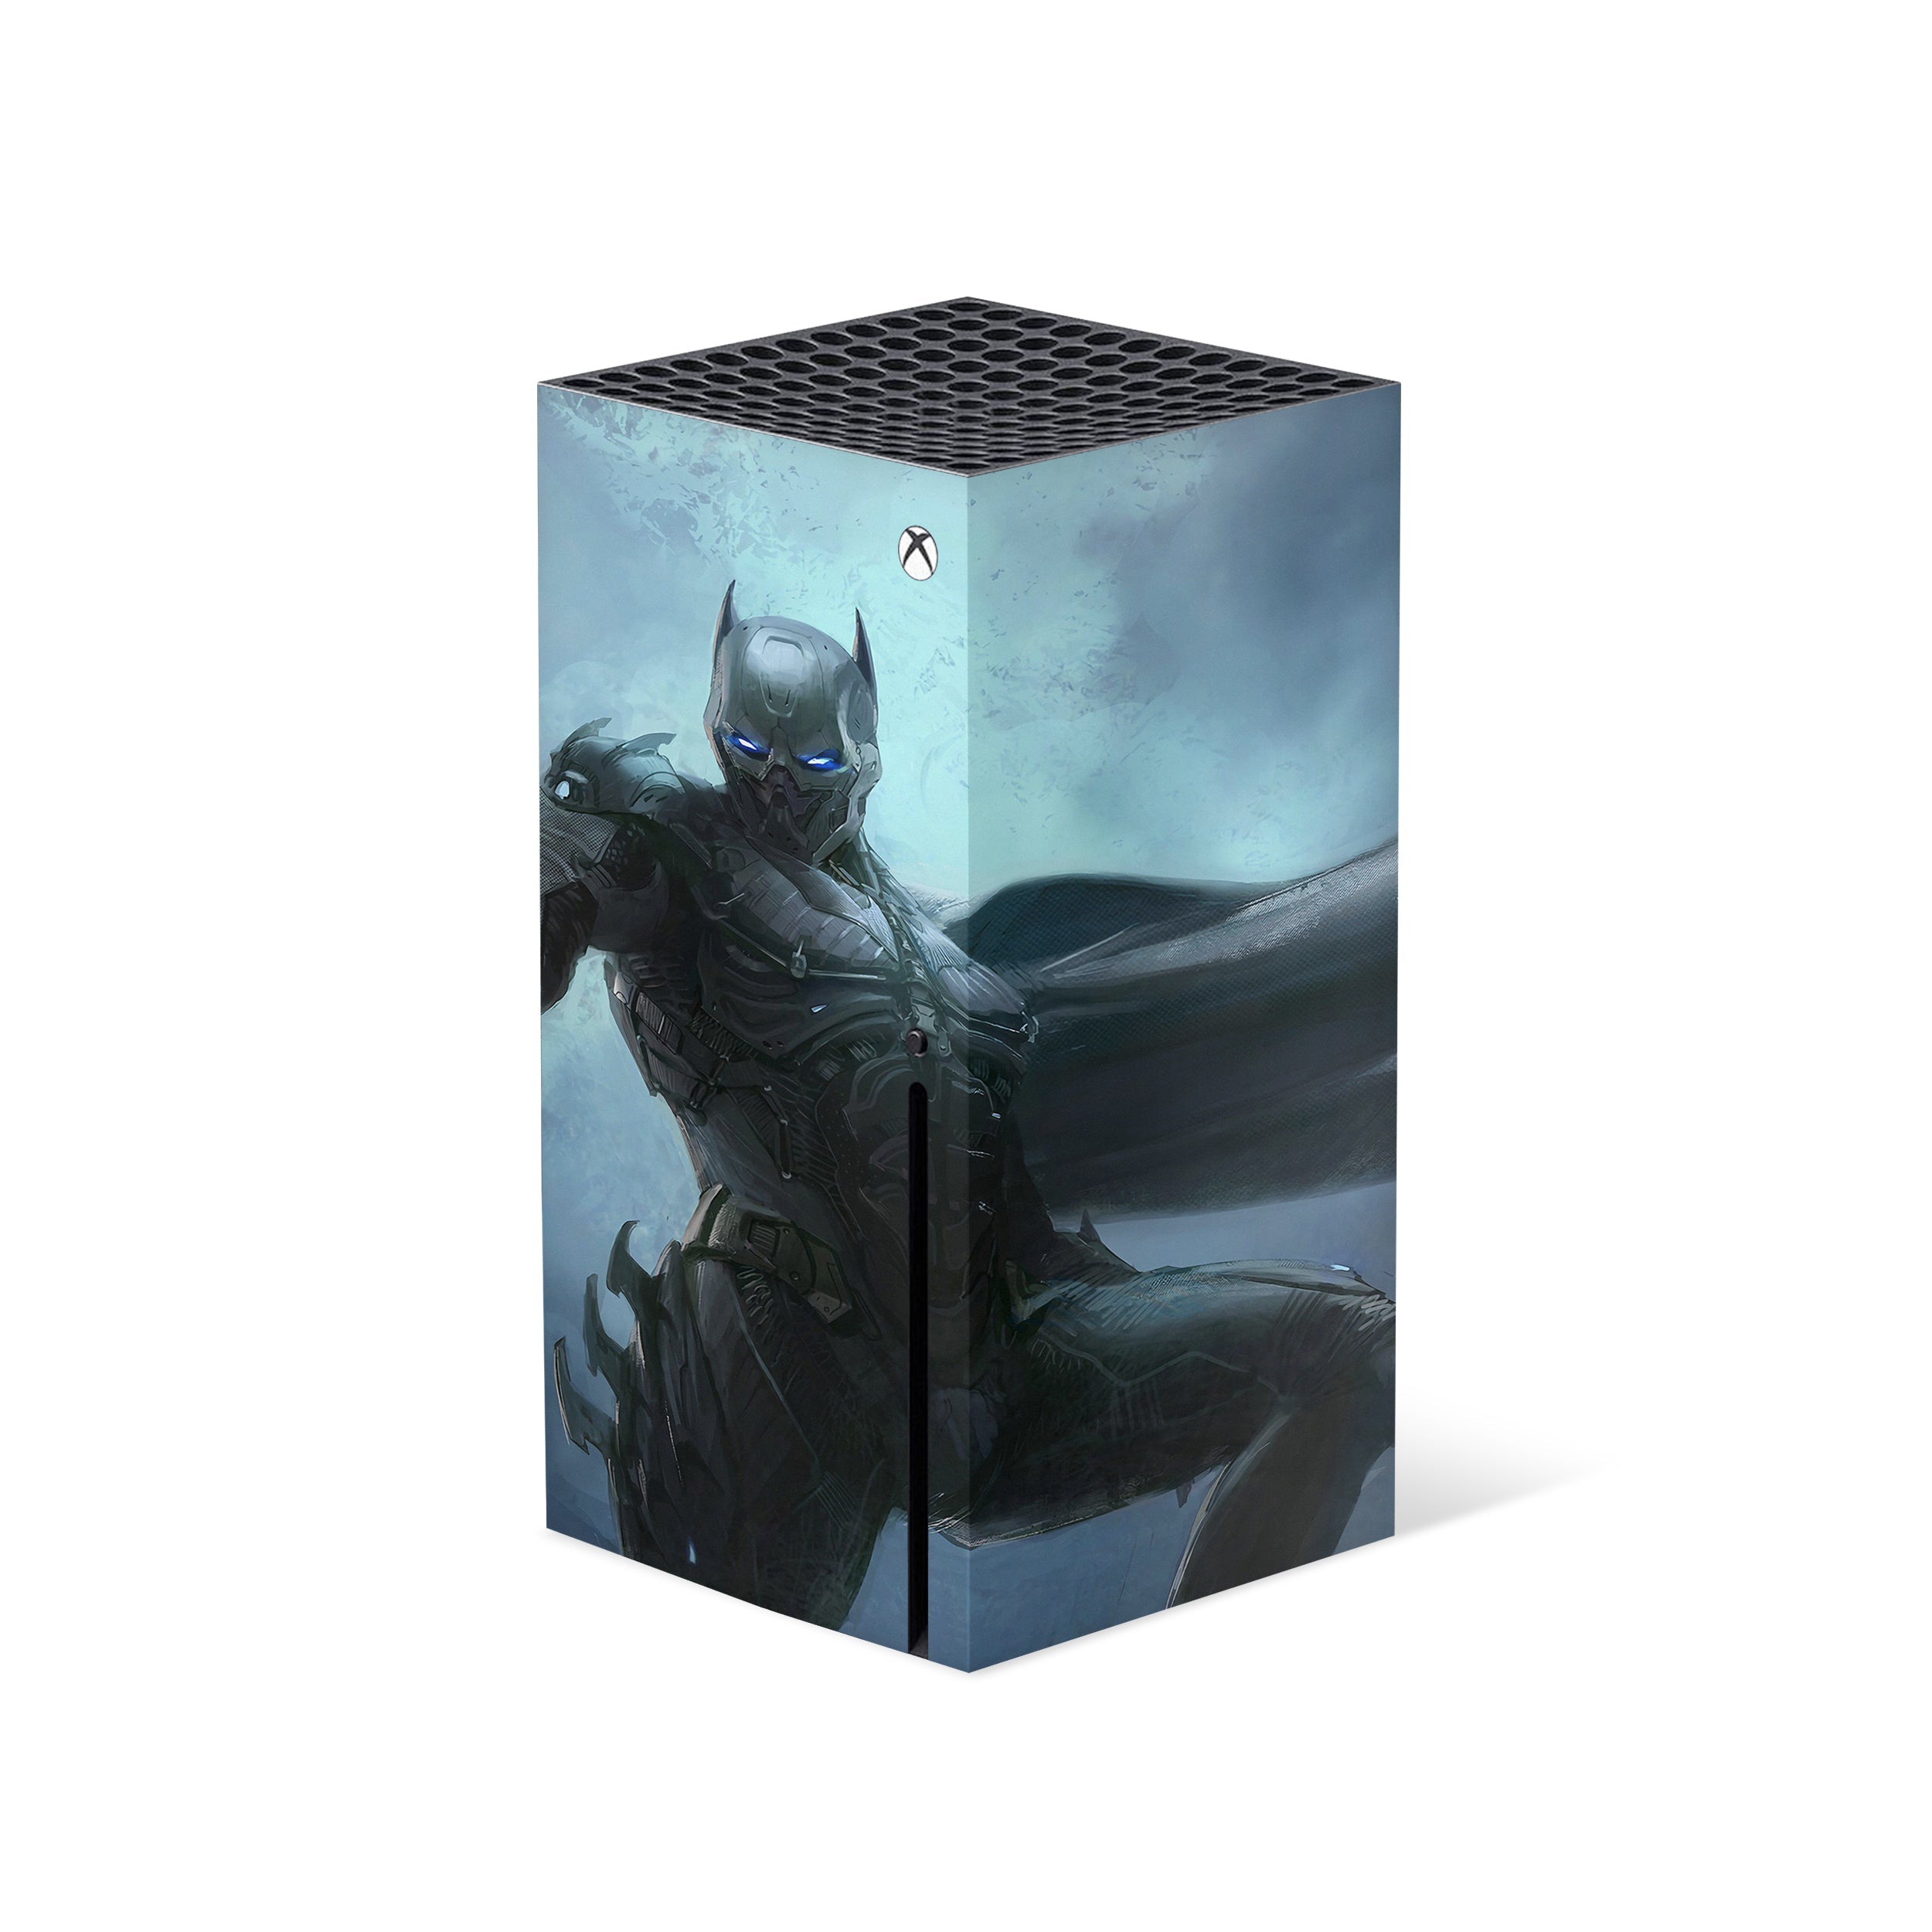 A video game skin featuring a DC Comics Batman design for the Xbox Series X.